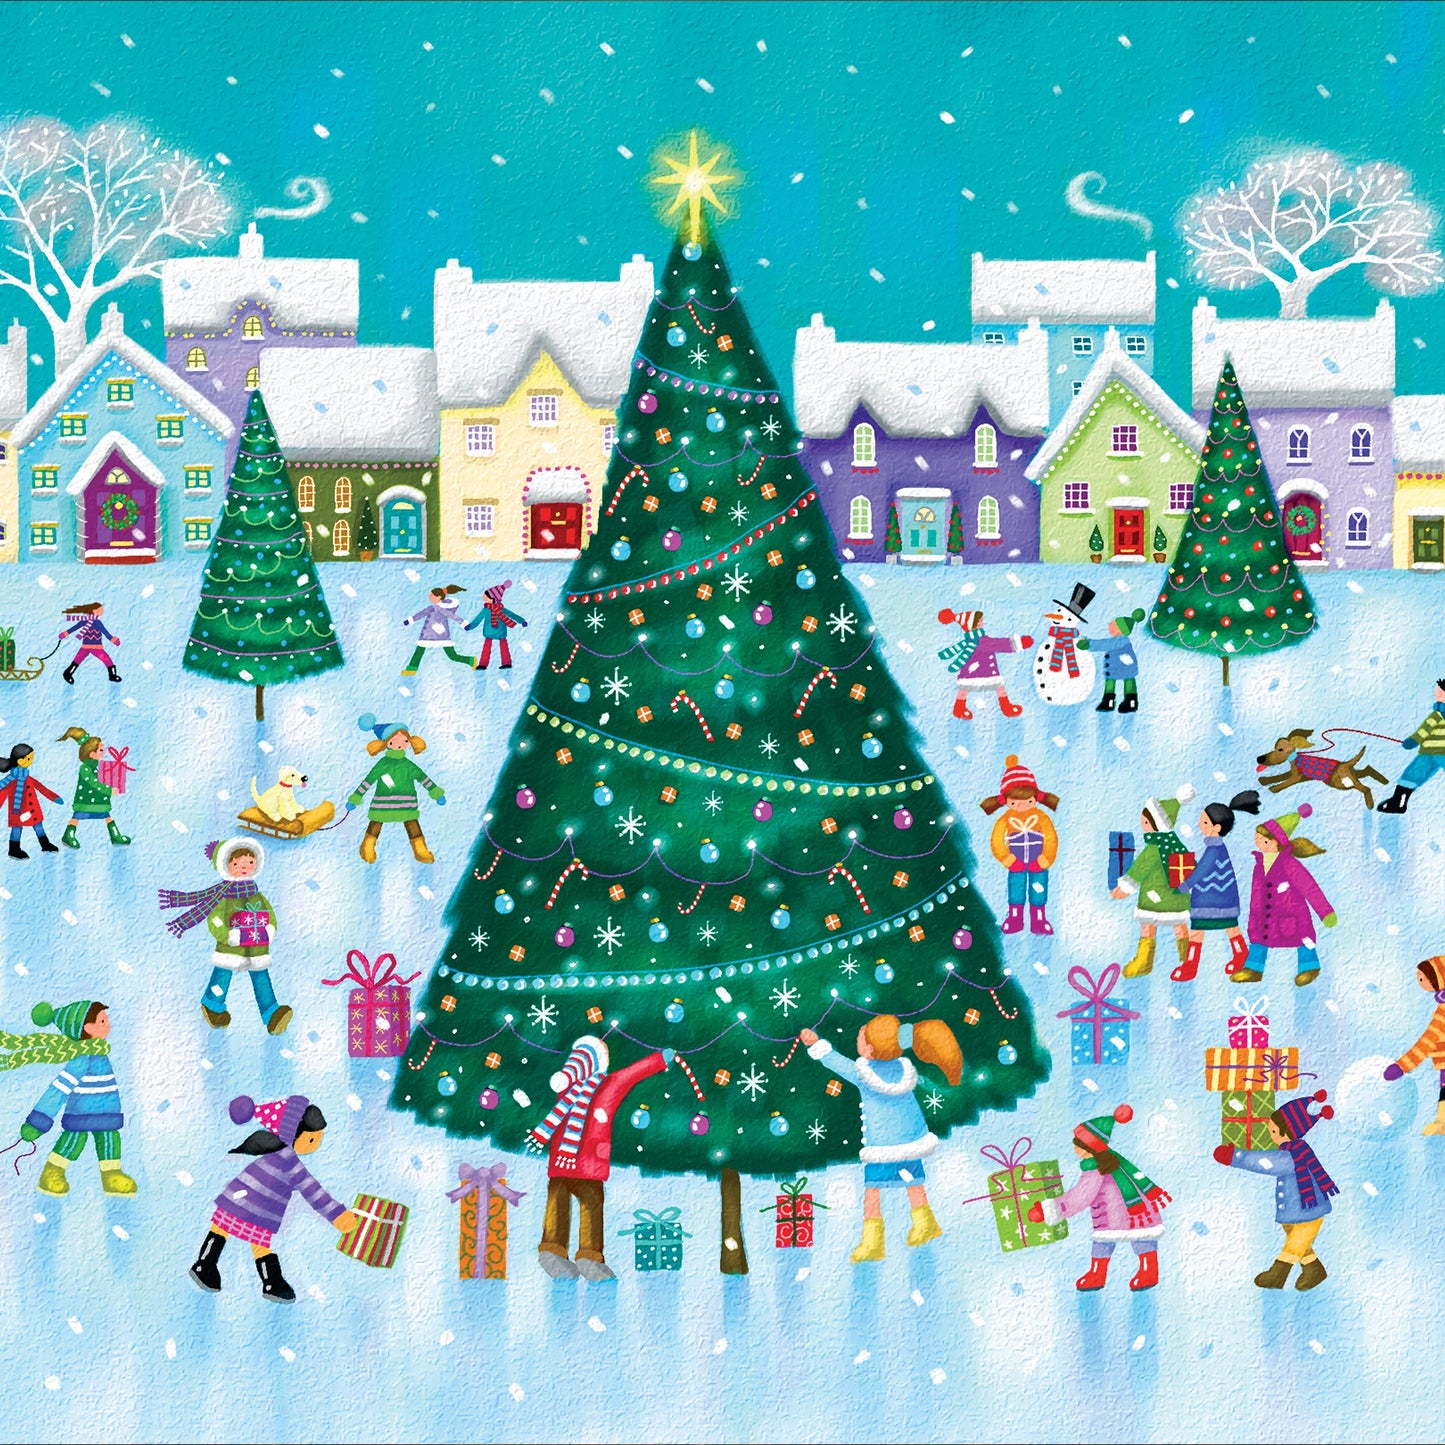 Christmas Town, SVP Christmas Charity Cards